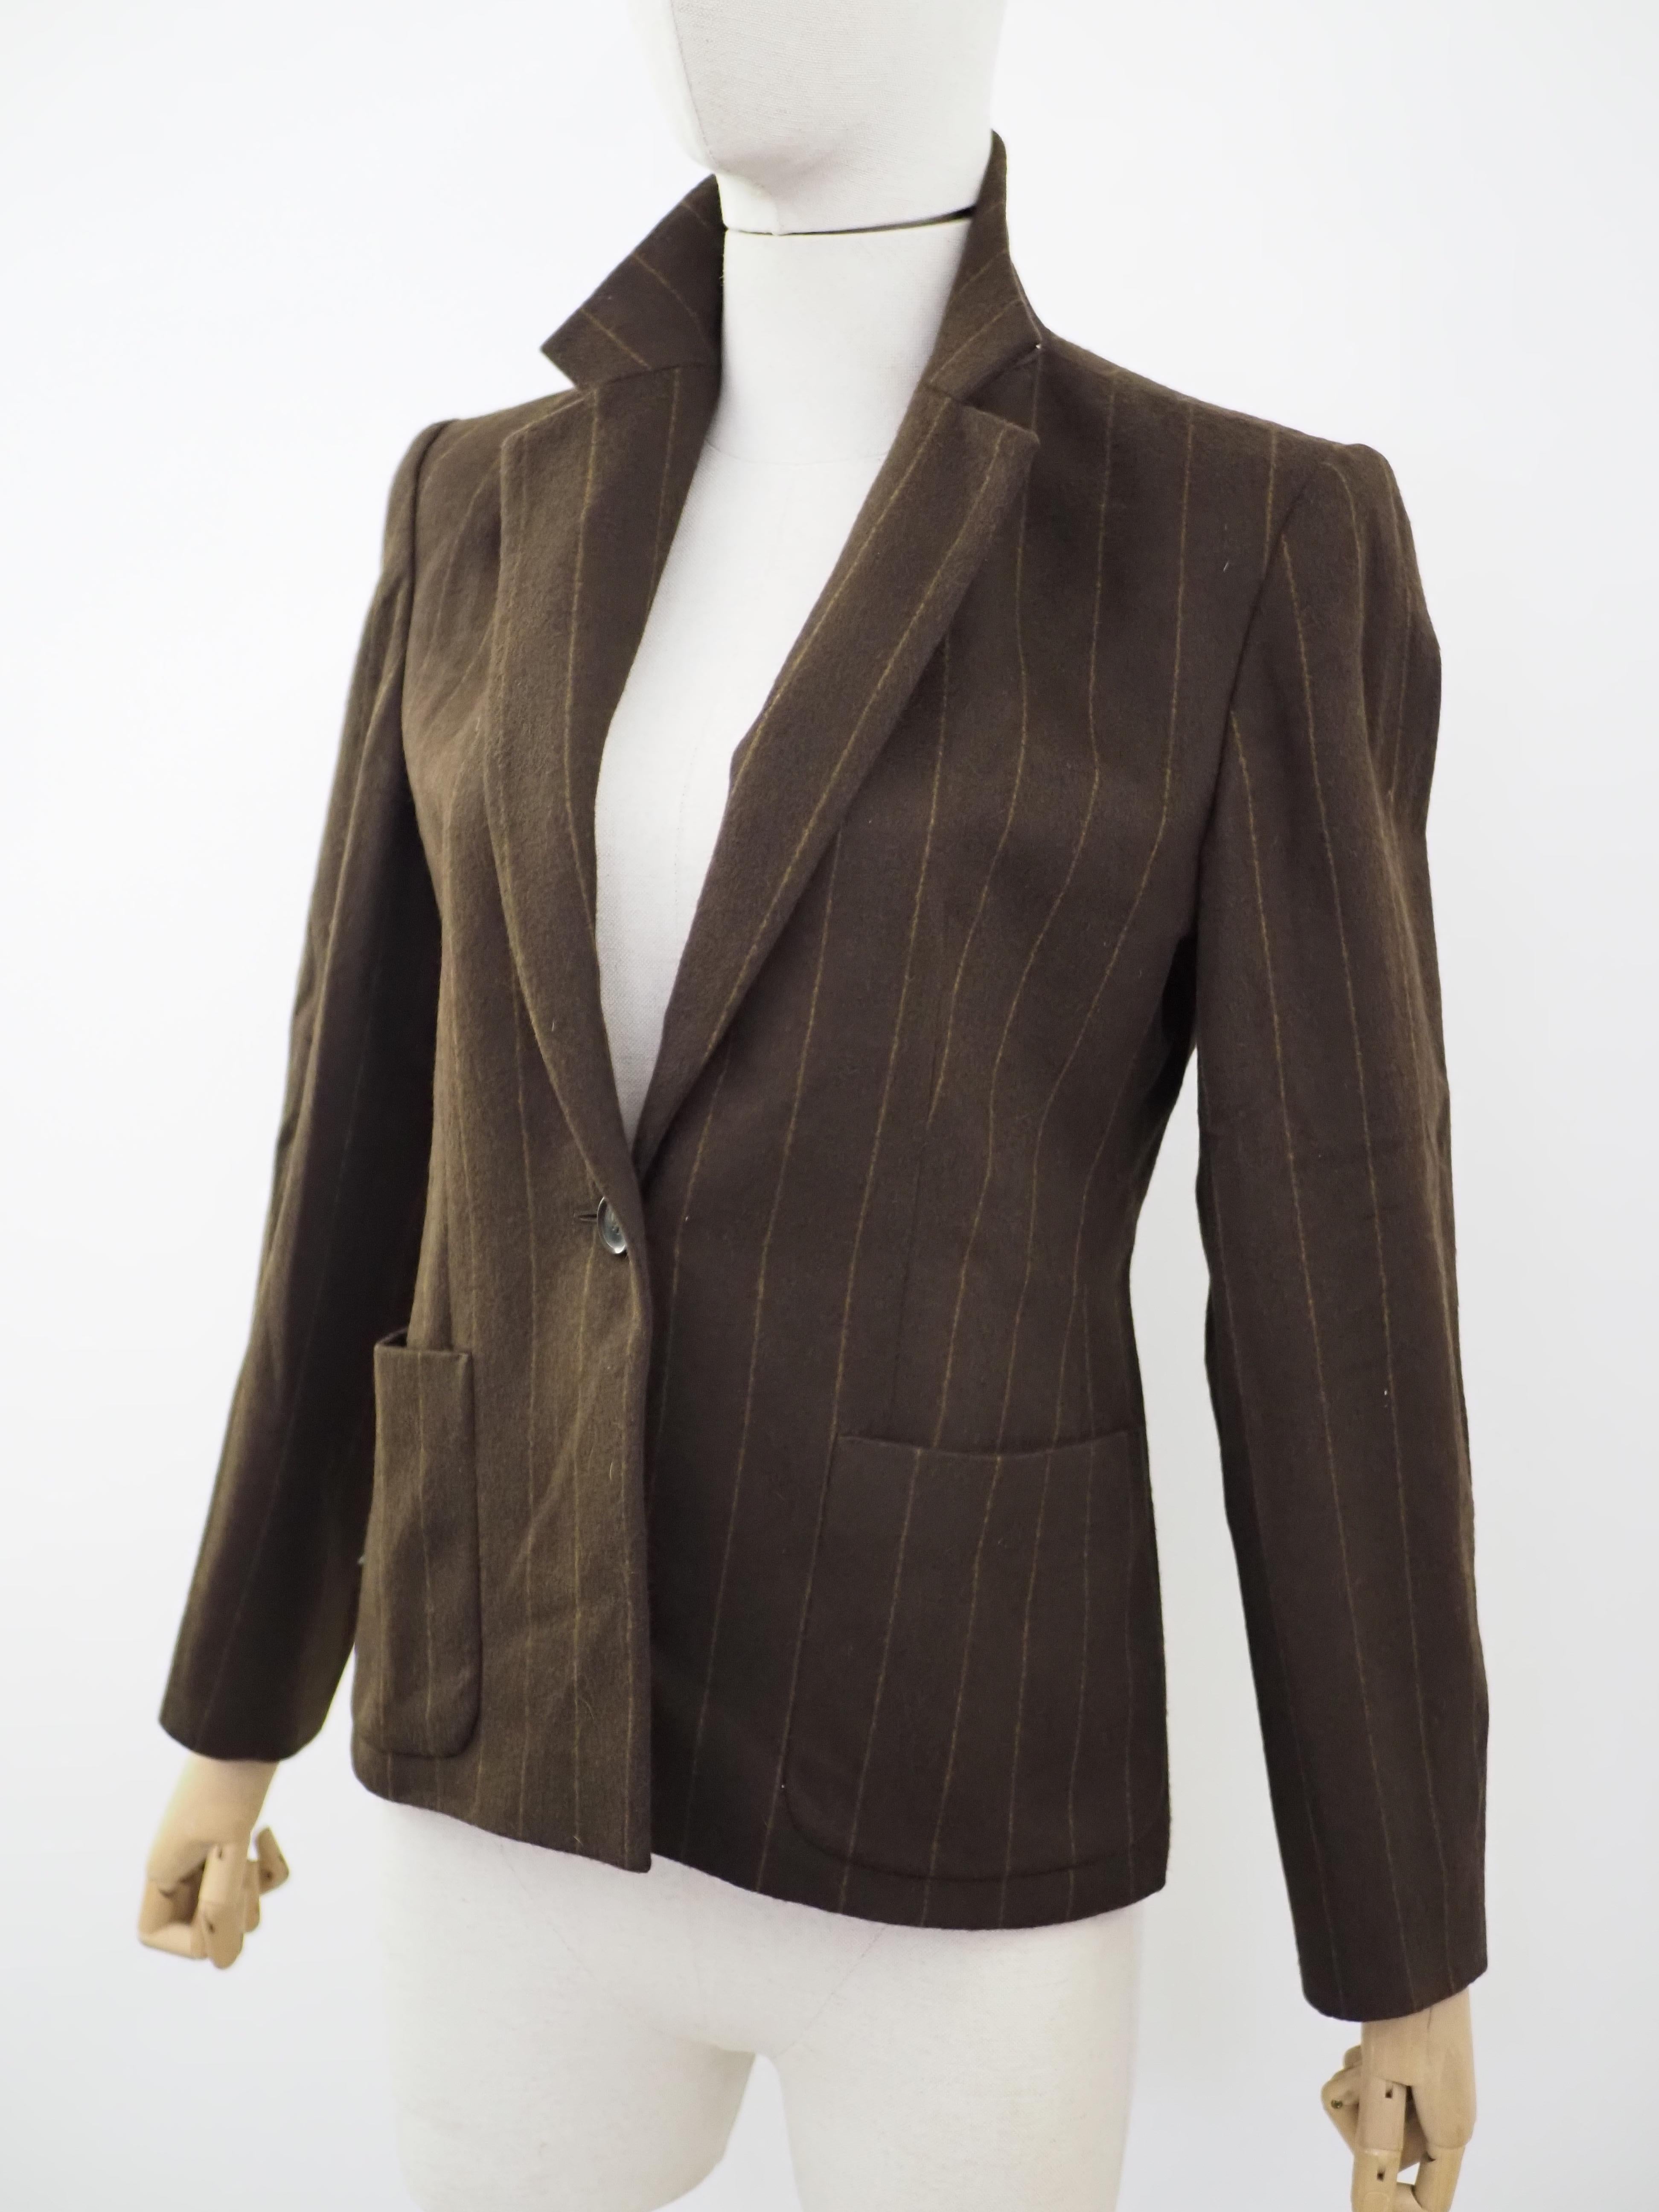 Max Mara brown wool jacket
size 42